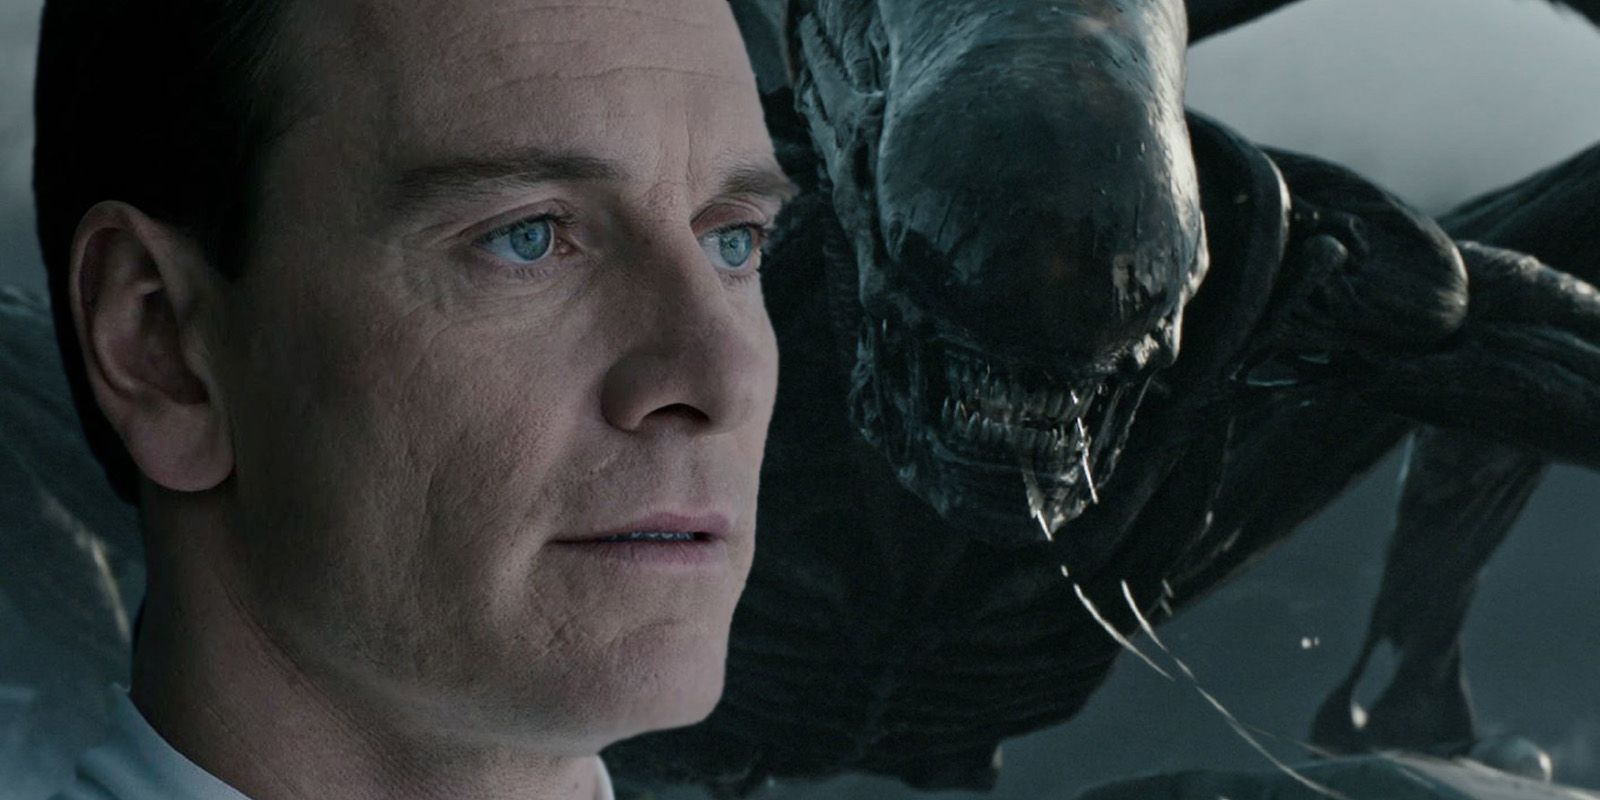 Michael Fassbender as Walter and Neomorph in Alien: Covenant